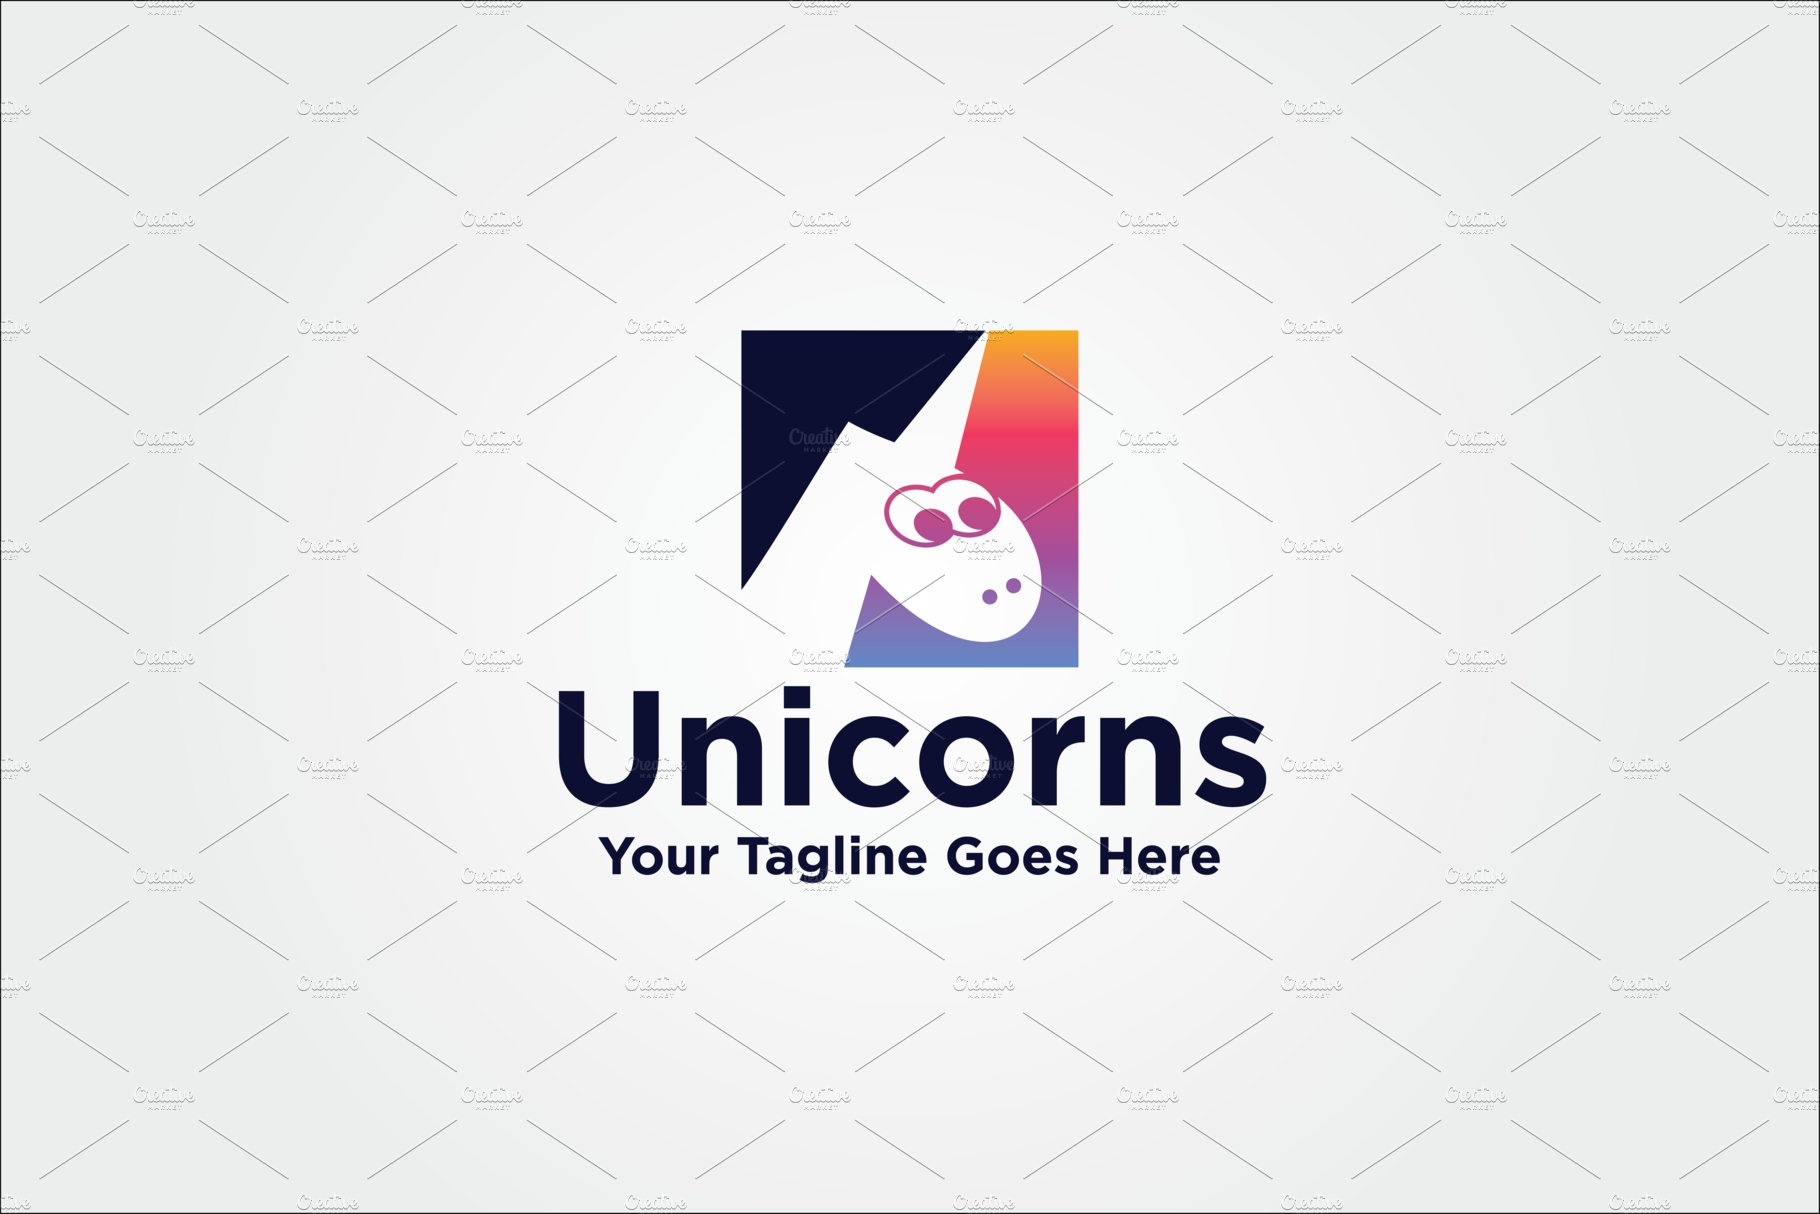 unicorns startup 326